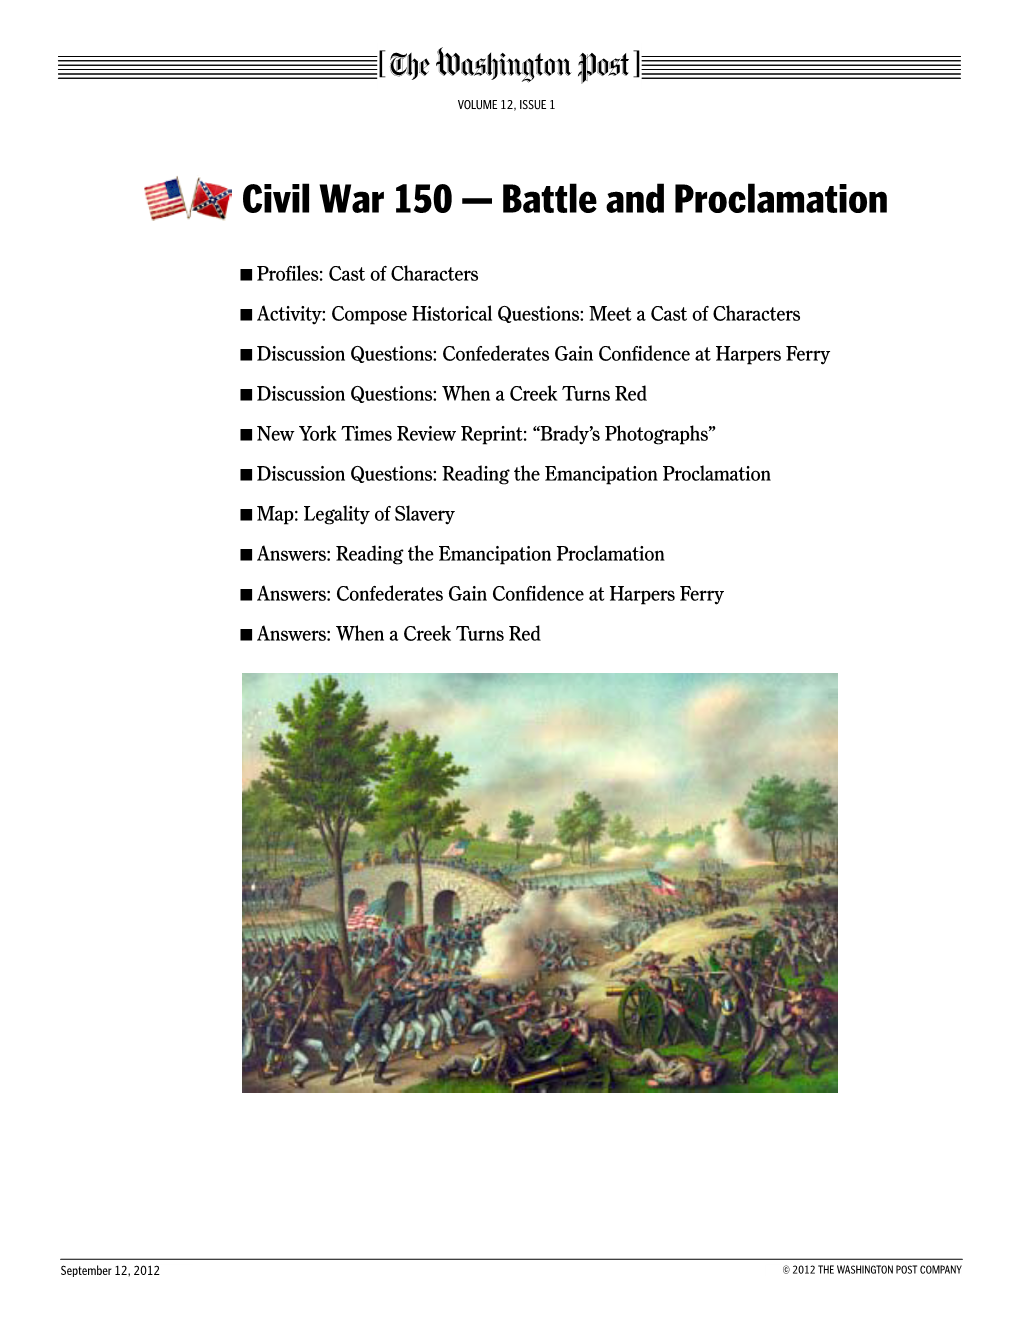 Civil War 150 — Battle and Proclamation